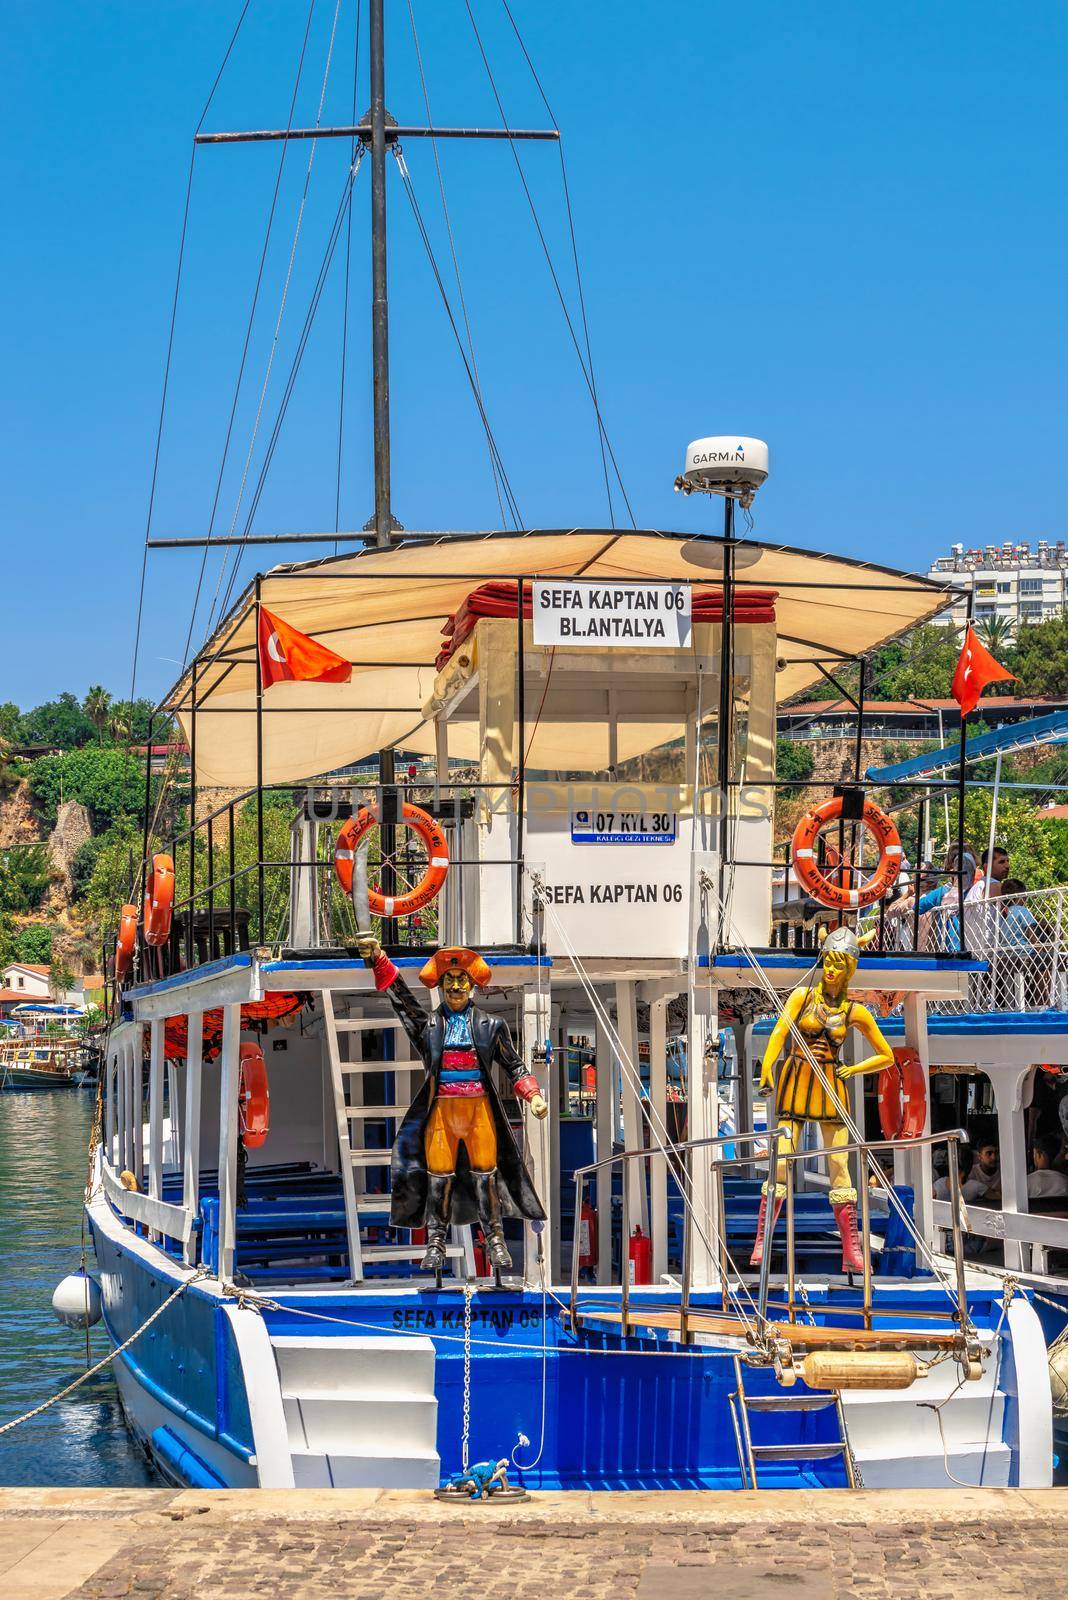 Antalya, Turkey 19.07.2021. Pleasure boats in the Roman harbor of Antalya, Turkey, on a sunny summer day